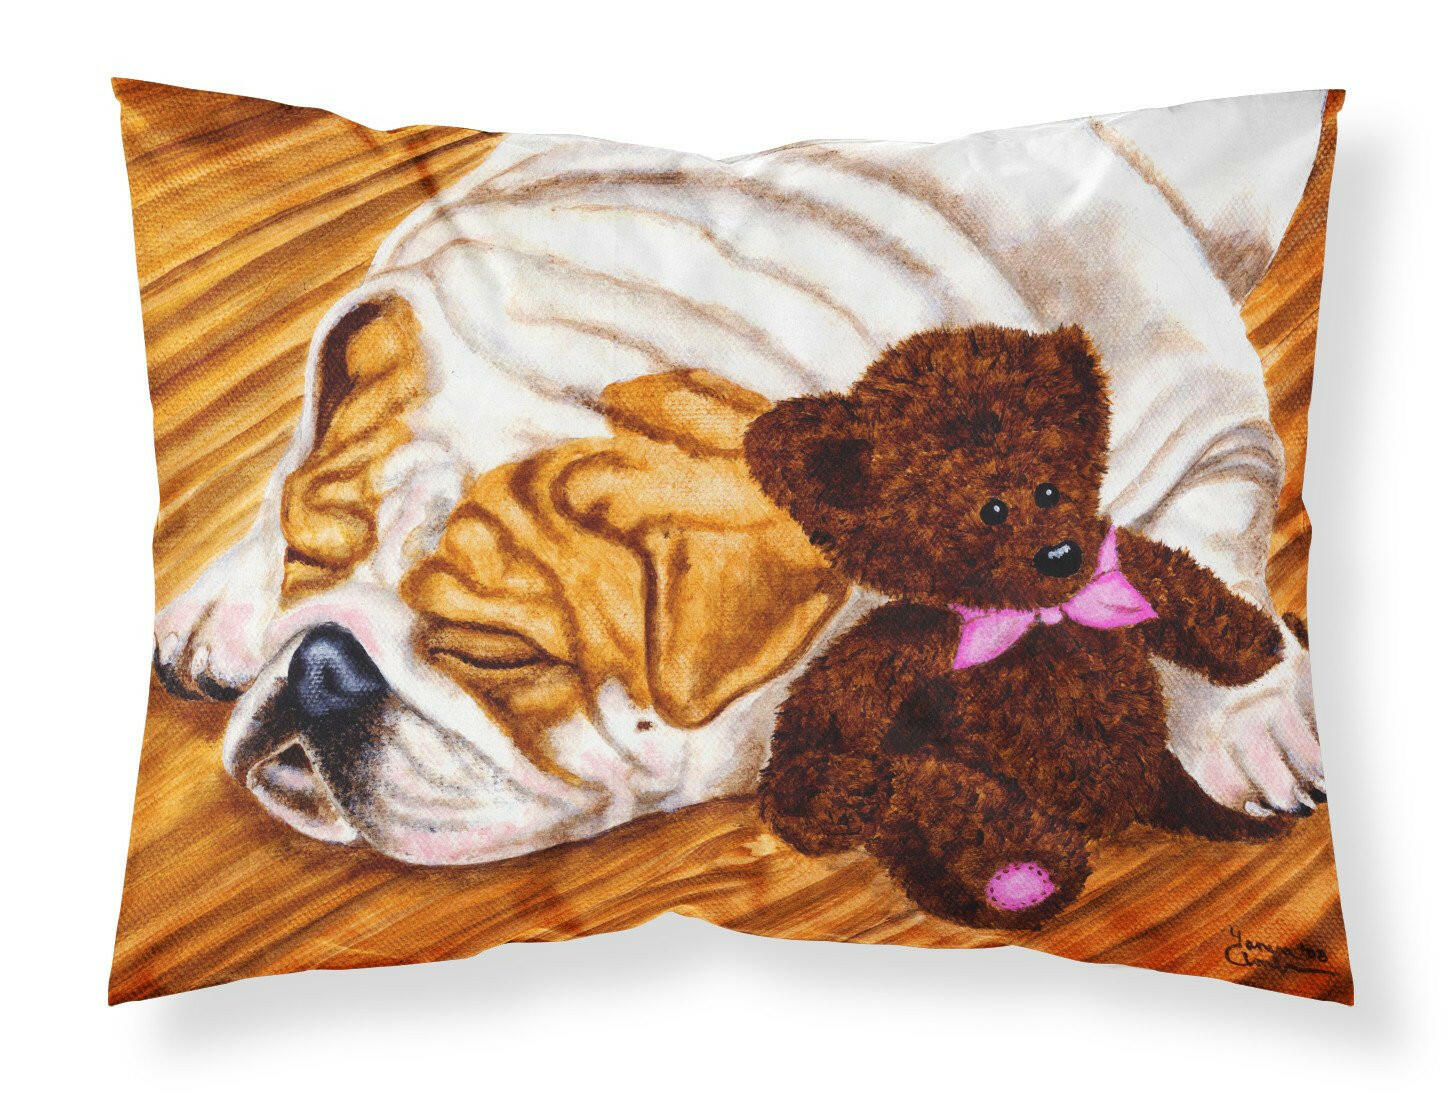 English Bulldog and Teddy Bear Fabric Standard Pillowcase AMB1003PILLOWCASE by Caroline's Treasures